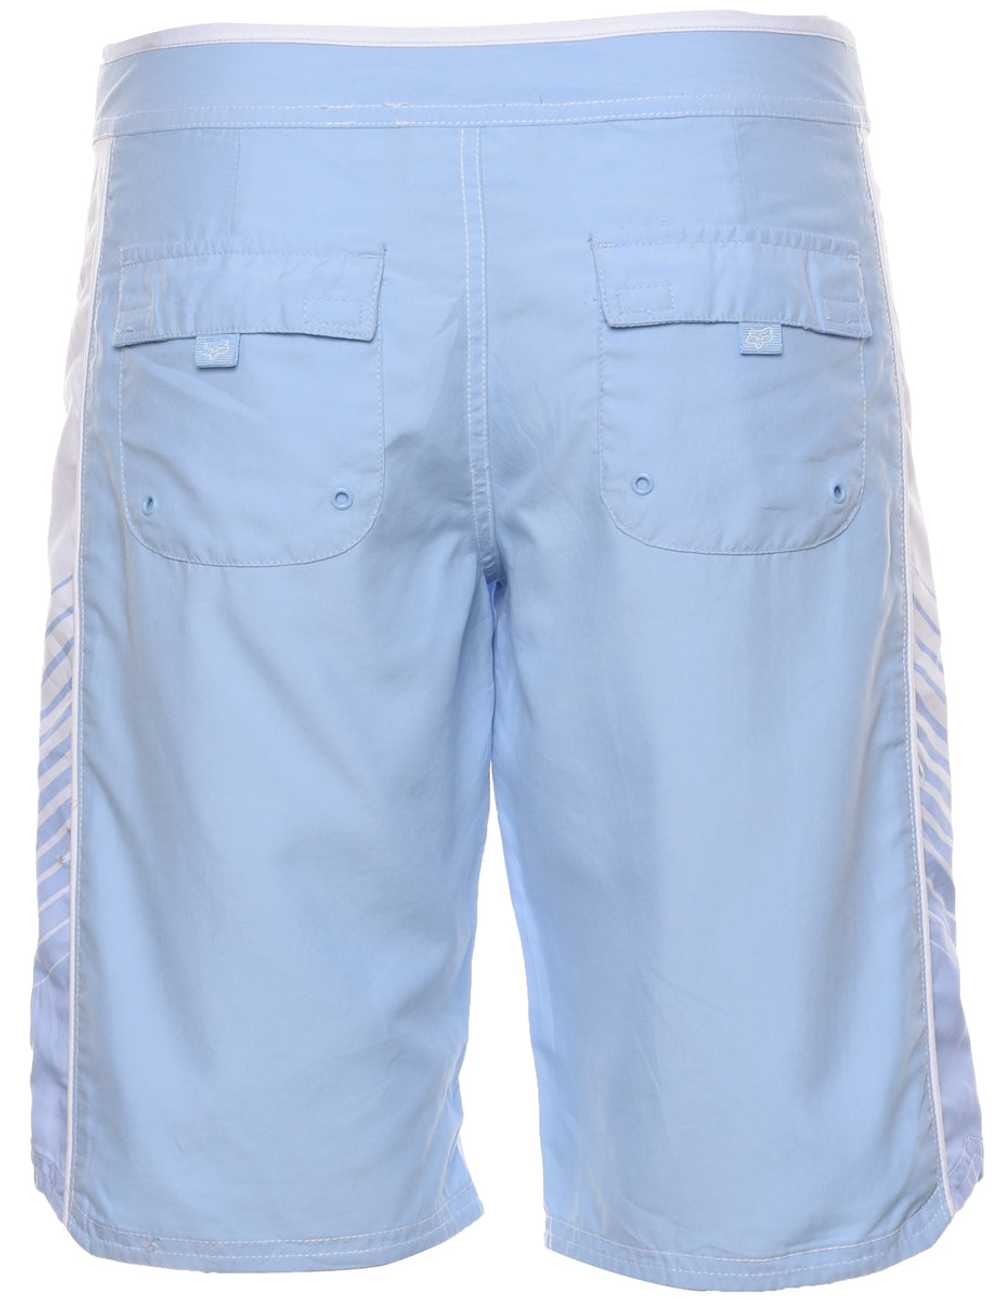 Light Blue Shorts - W30 L10 - image 2